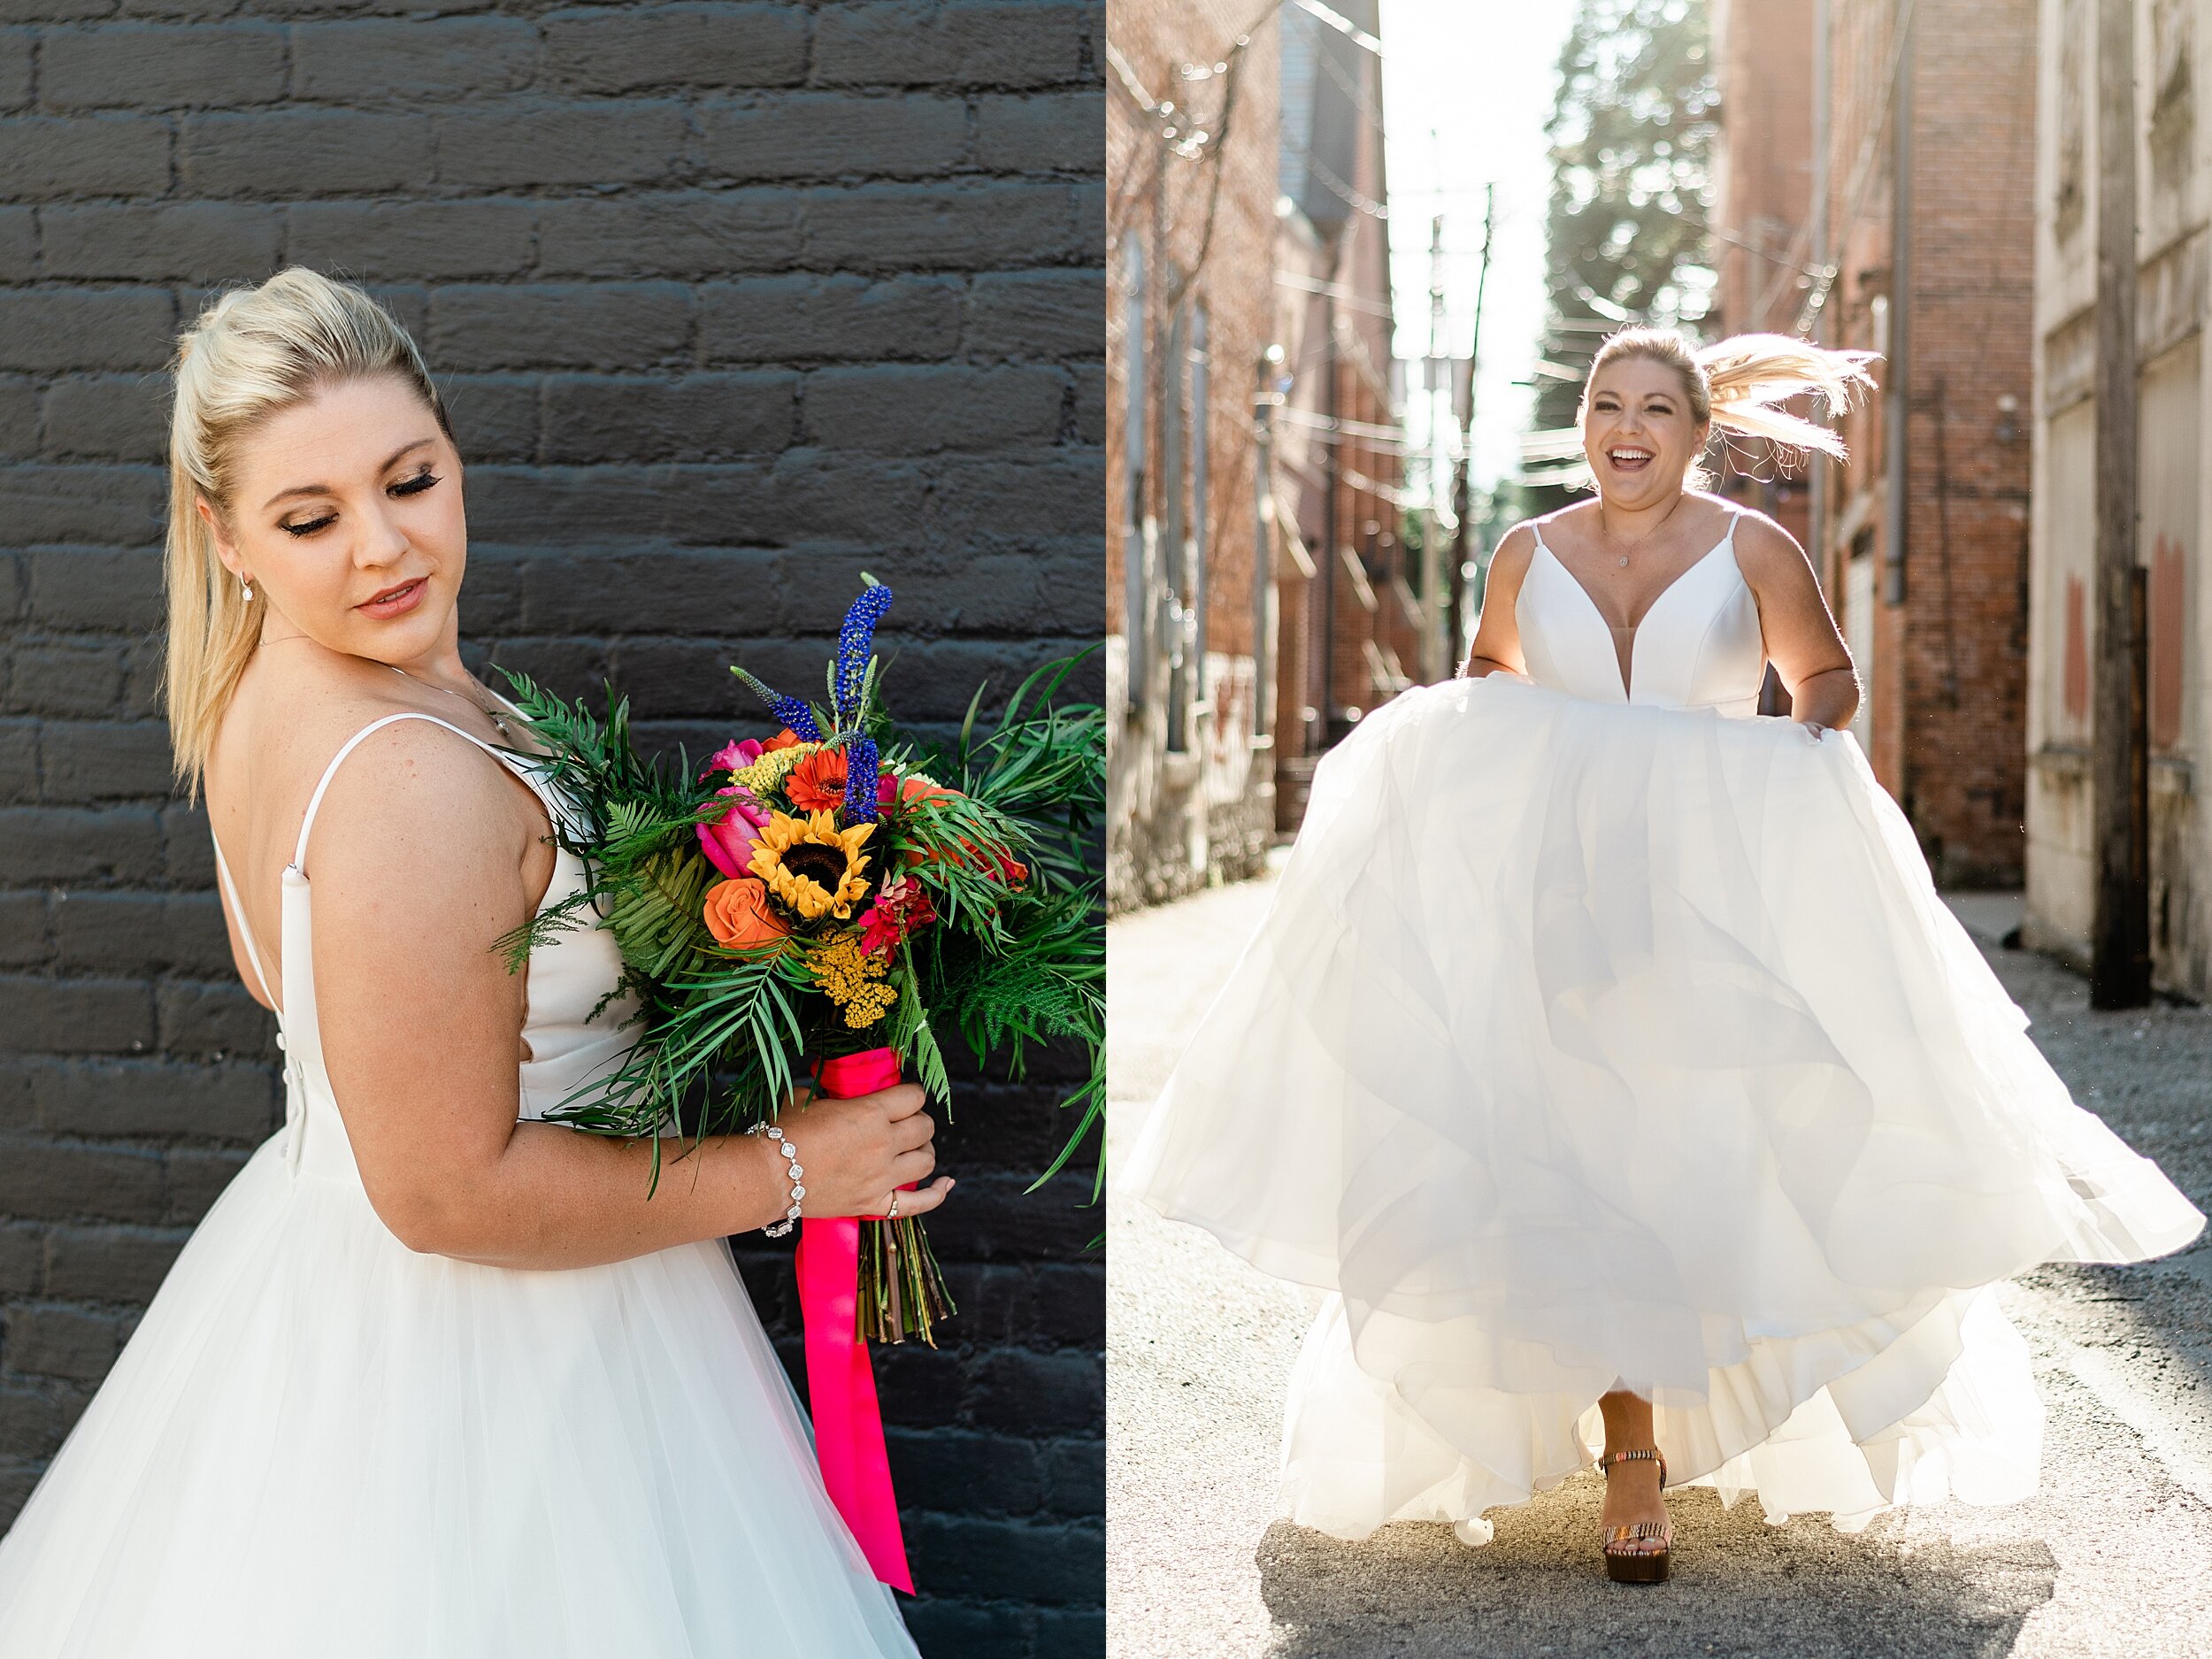 sisters-bridal-boutique-laudicks-jewelry-betsys-bouquets-van-wert-ohio-wedding-photographer-the-association-photography_6898.jpg